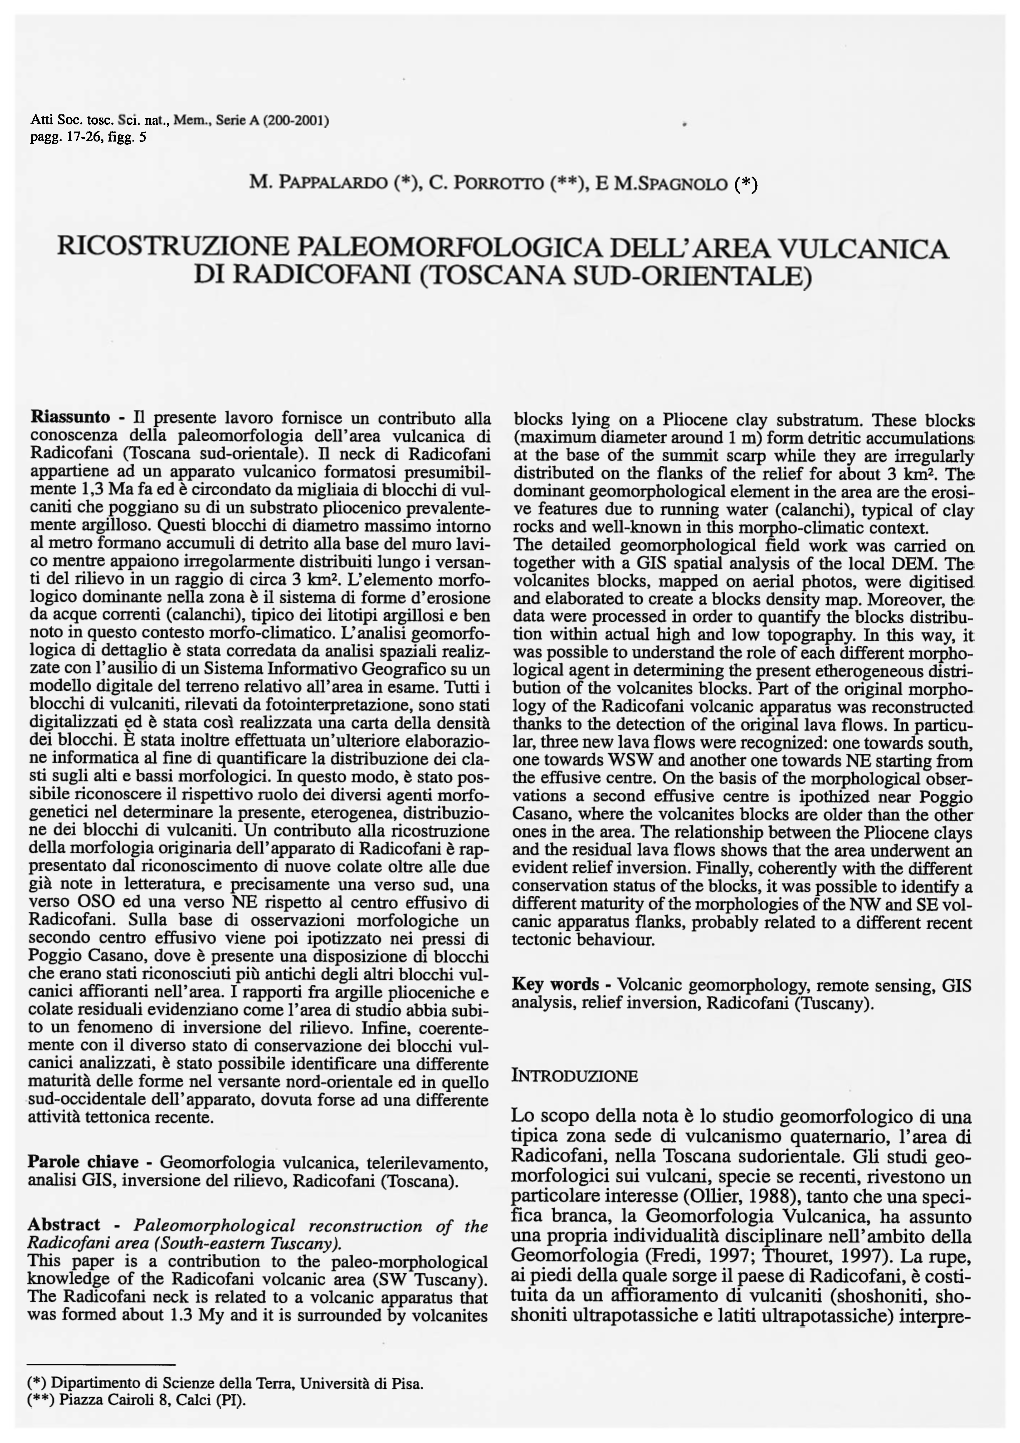 Ricostruzione Paleomorfologica Dell’Area Vulcanica Di Radicofani (Toscana Sud-Orientale)